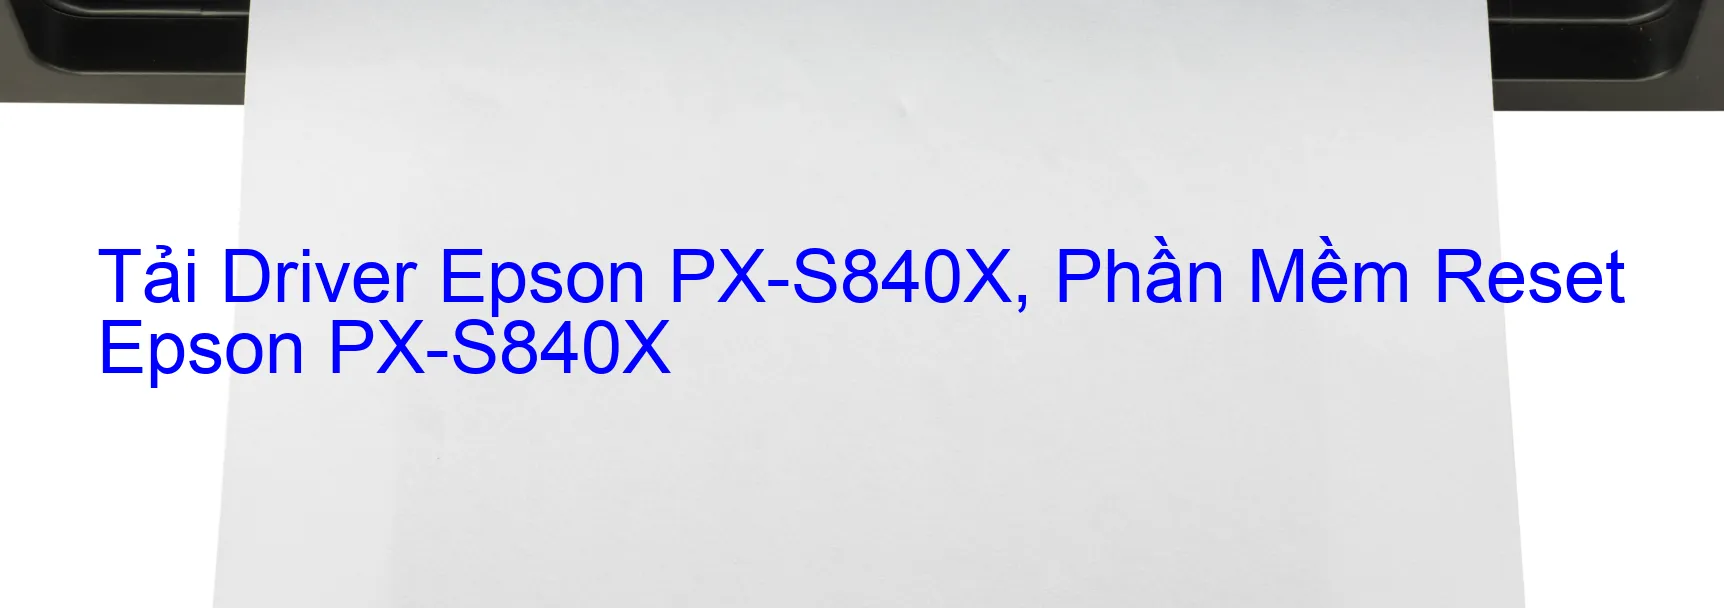 Driver Epson PX-S840X, Phần Mềm Reset Epson PX-S840X